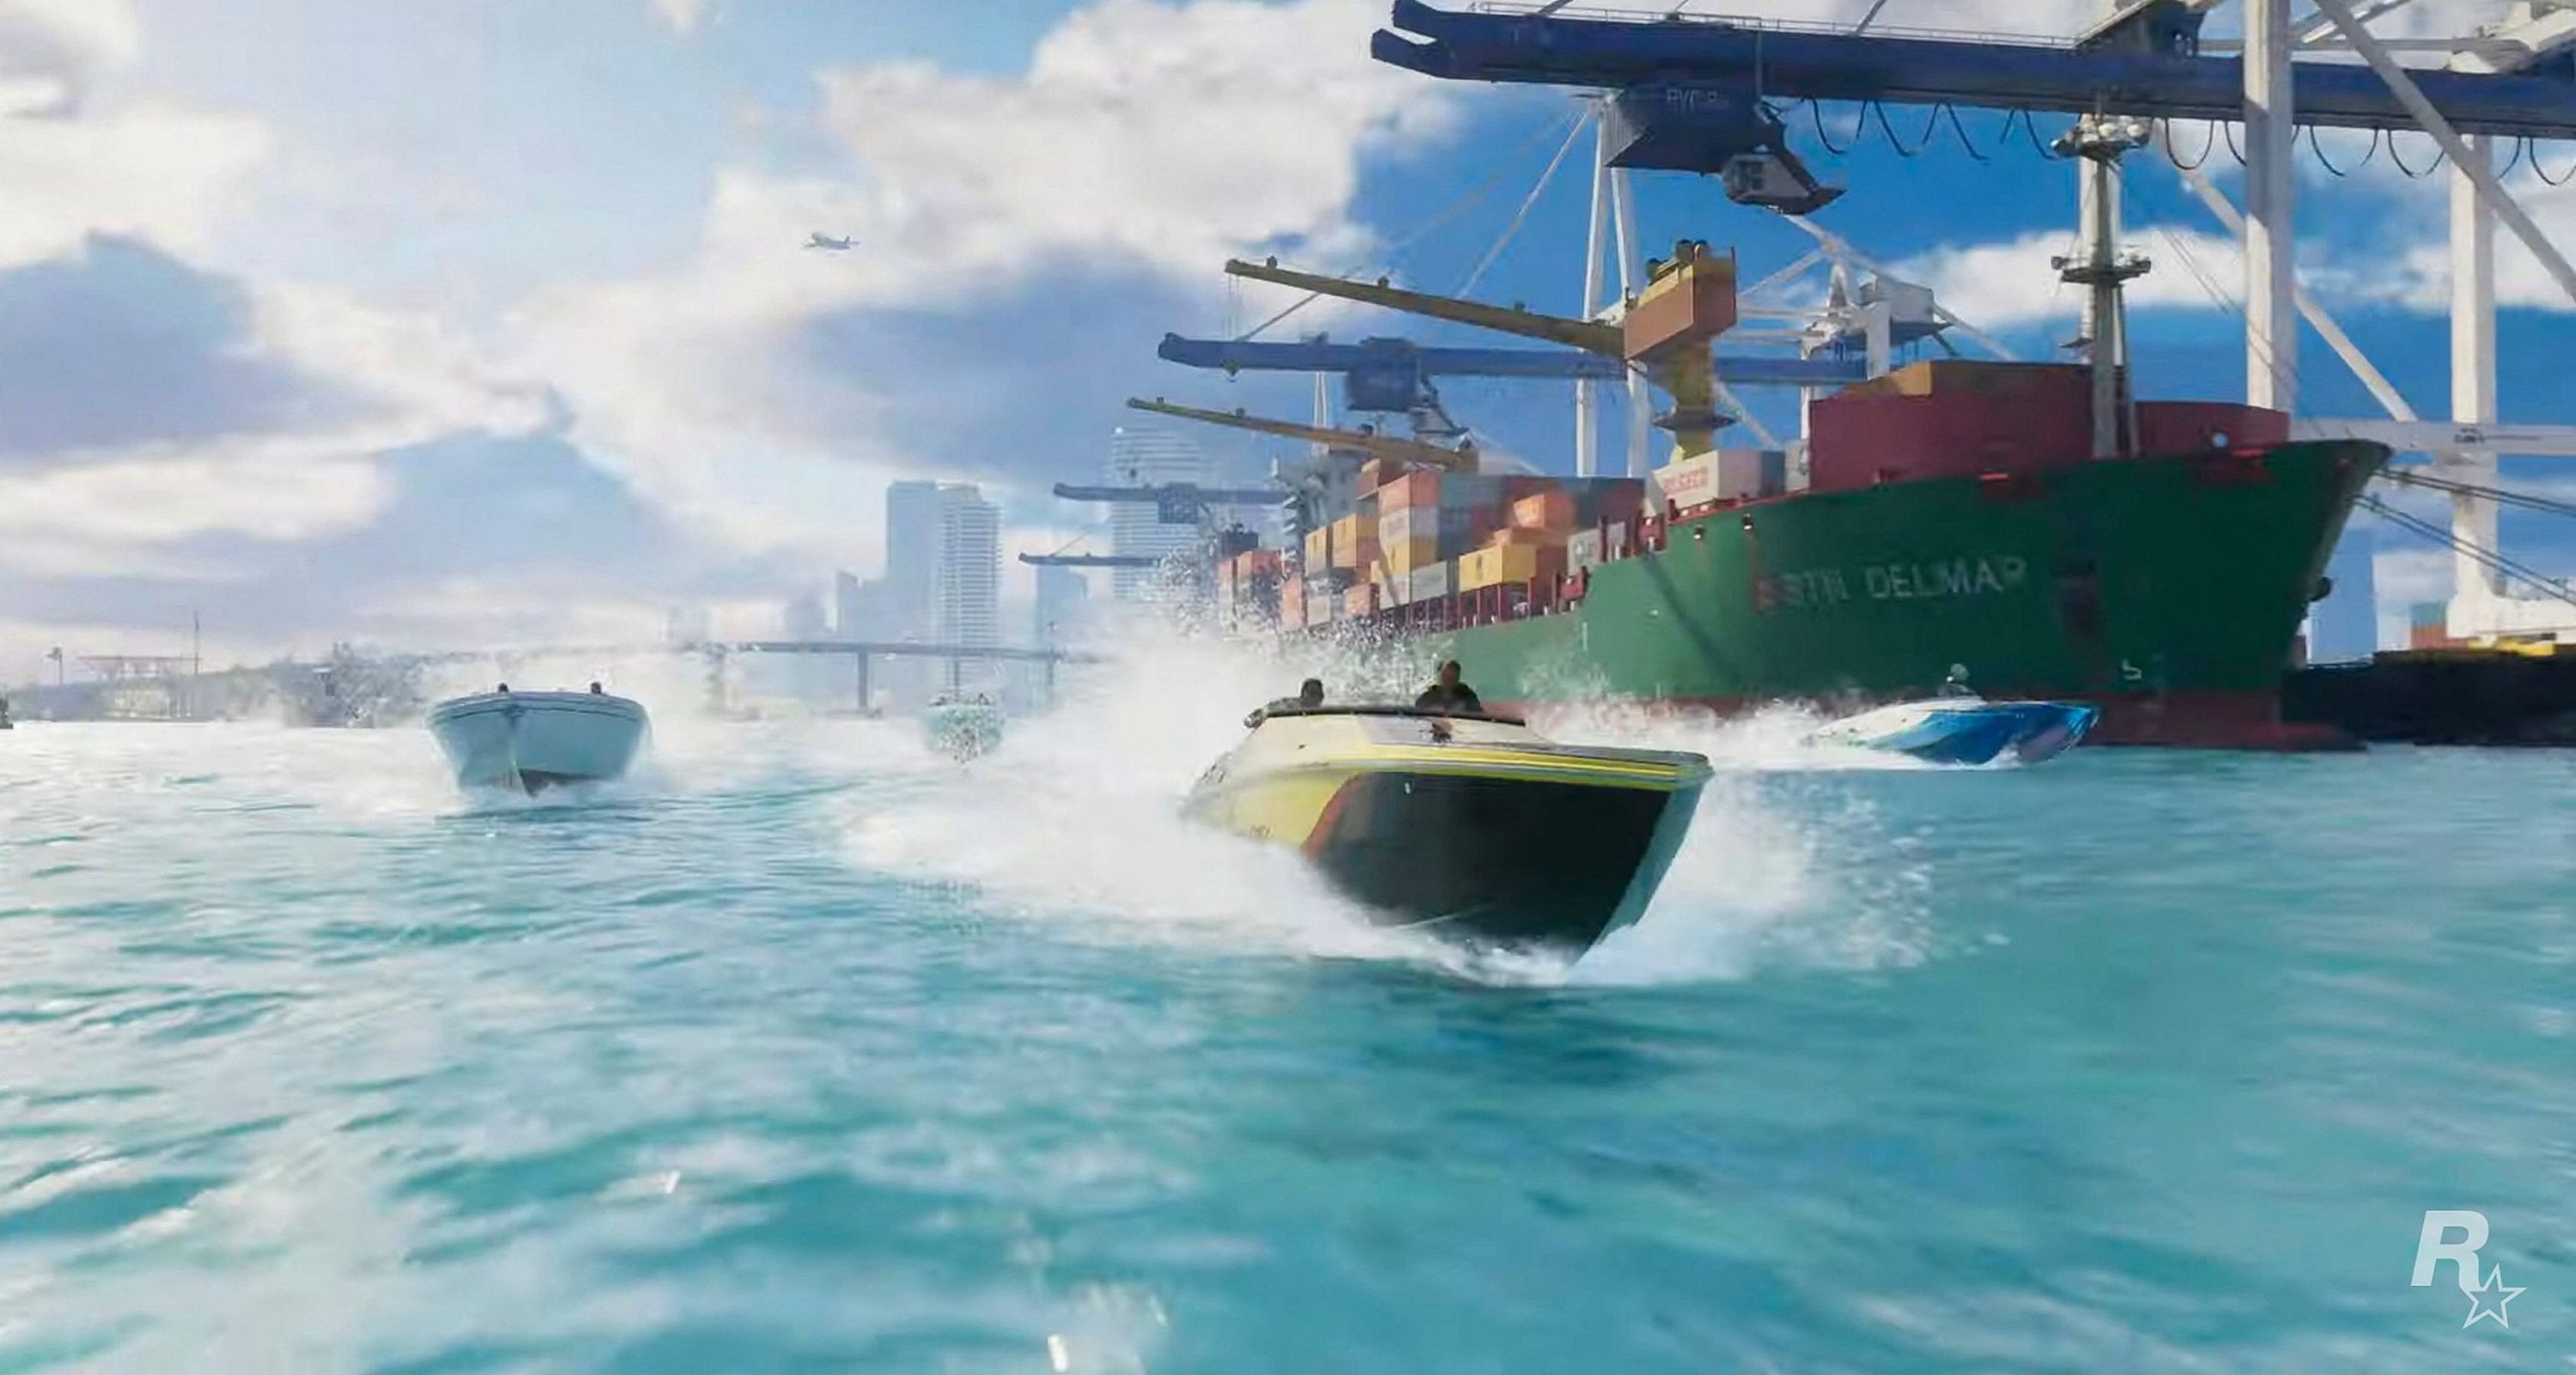 Grand Theft Auto VI trailer: six hidden details about Rockstar's  blockbuster new game